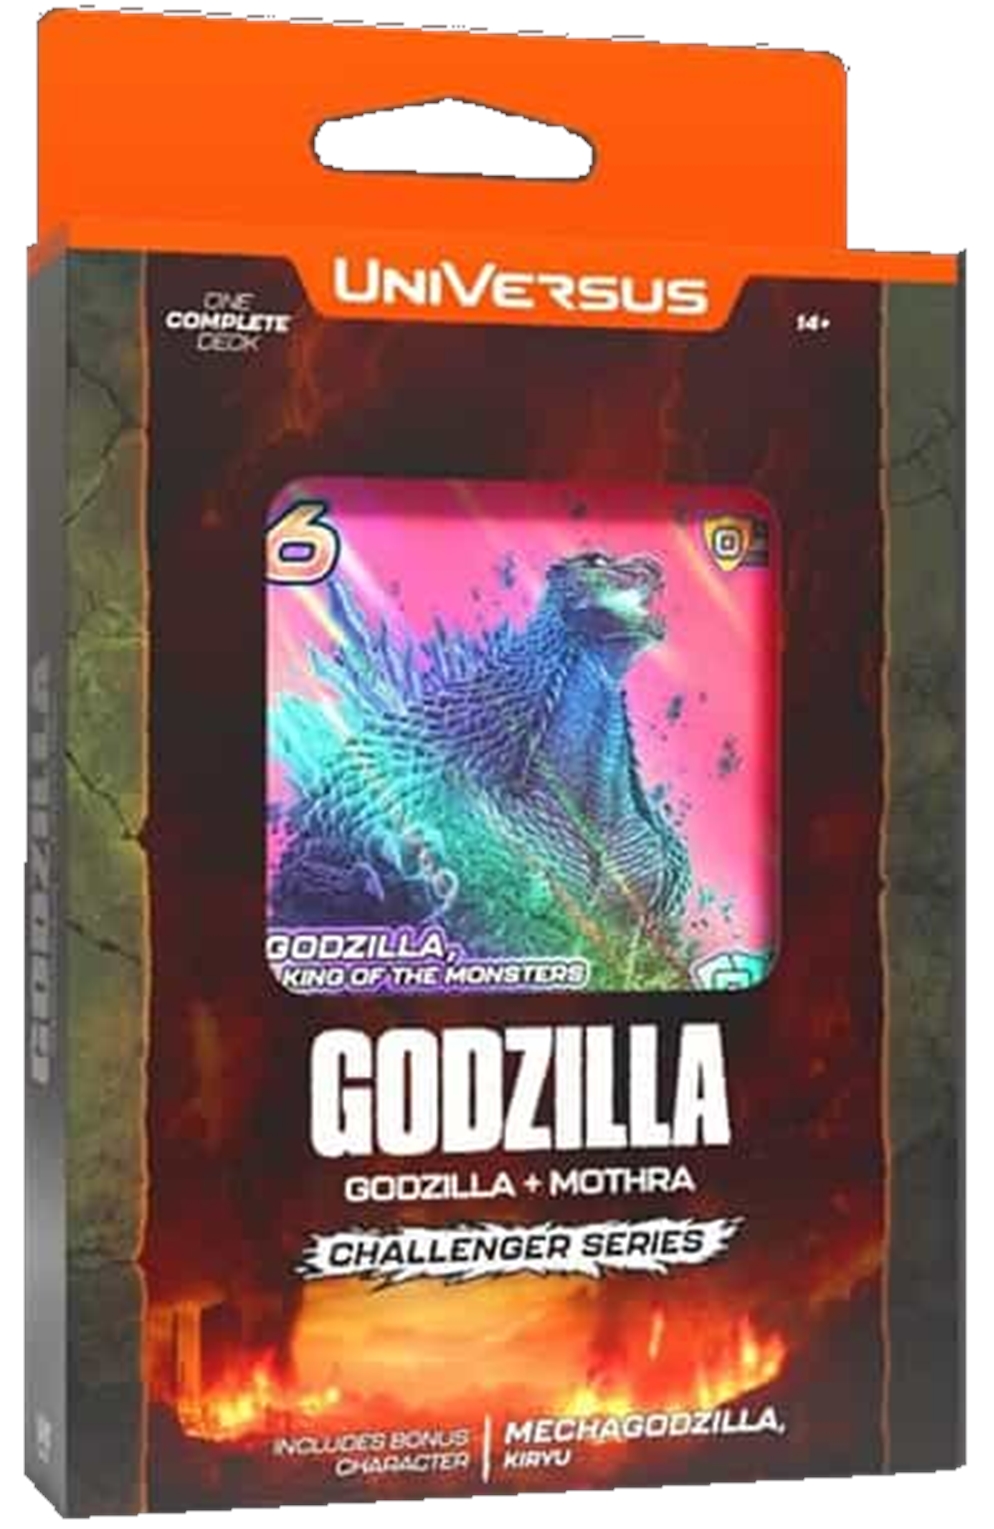 Universus Tcg: Godzilla Challenger Series - Godzilla + Mothra Deck